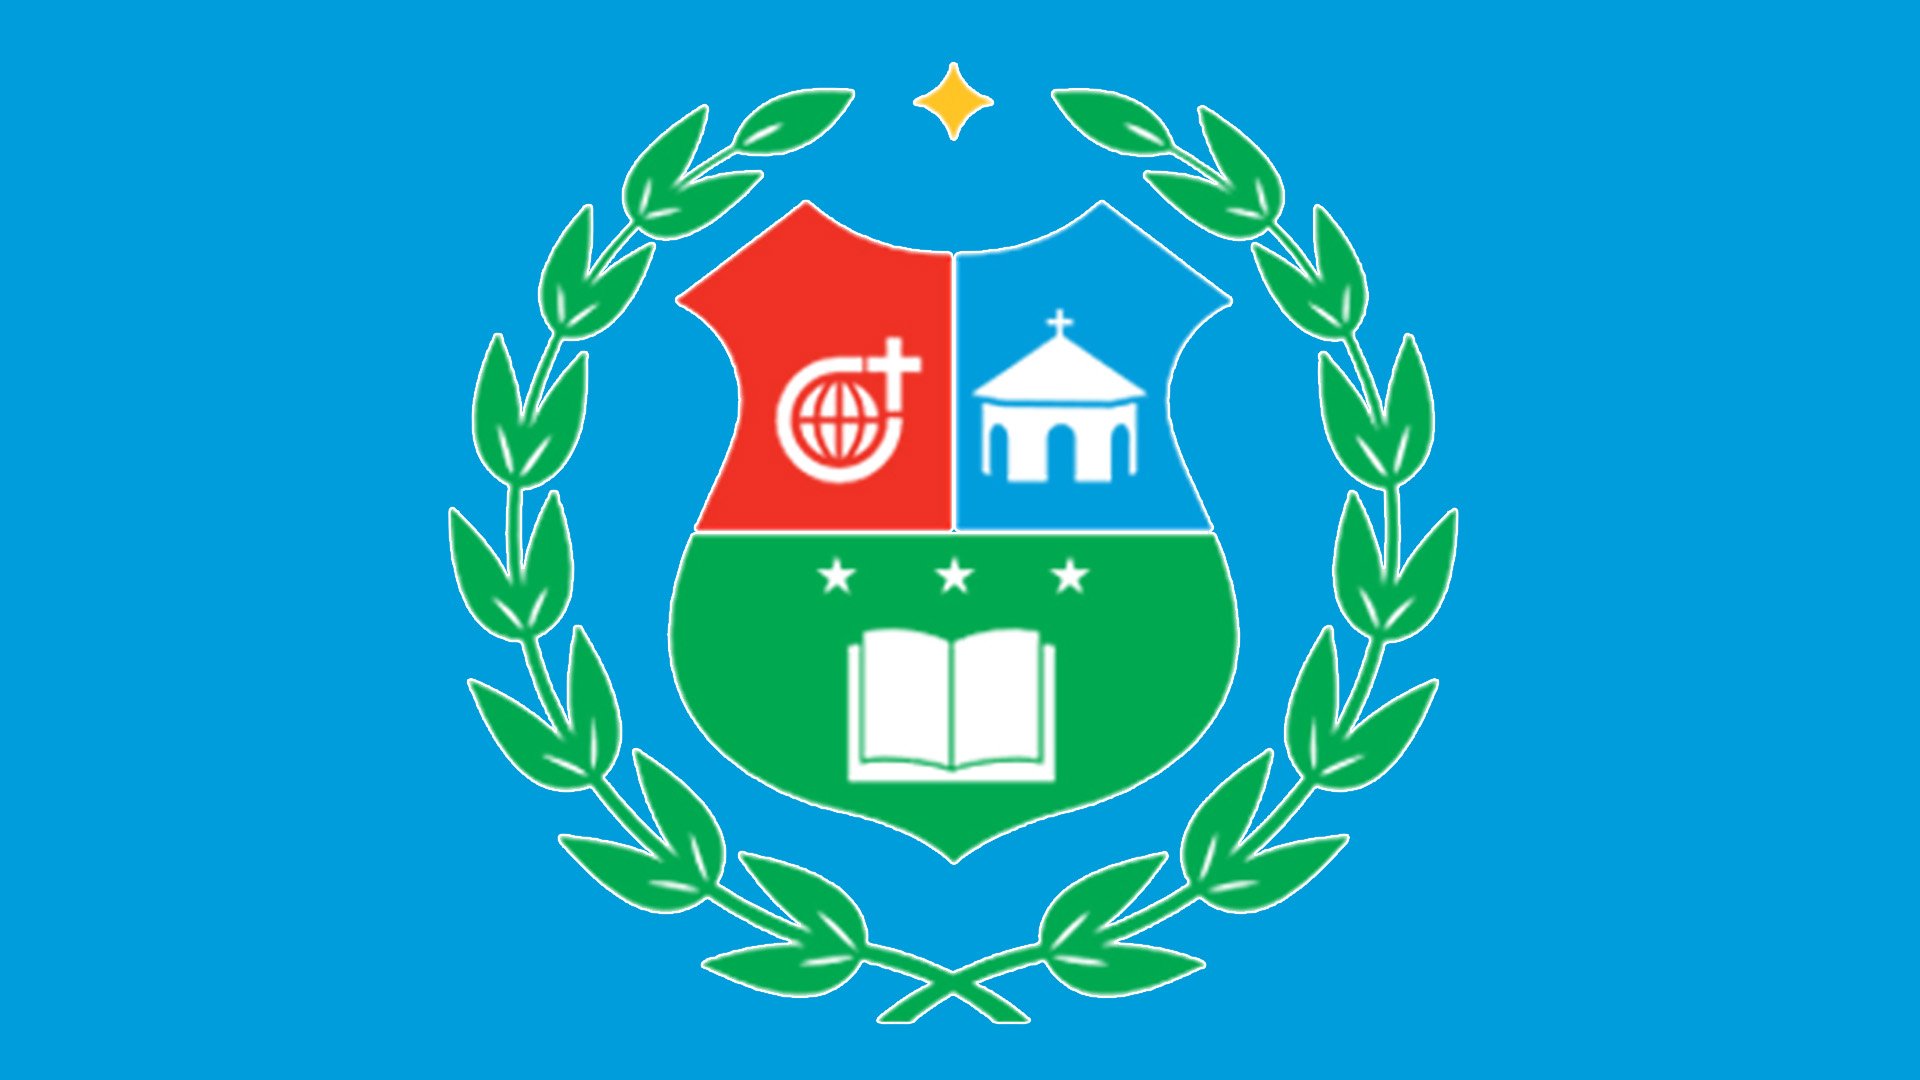 University Of San Carlos Logo Transparent